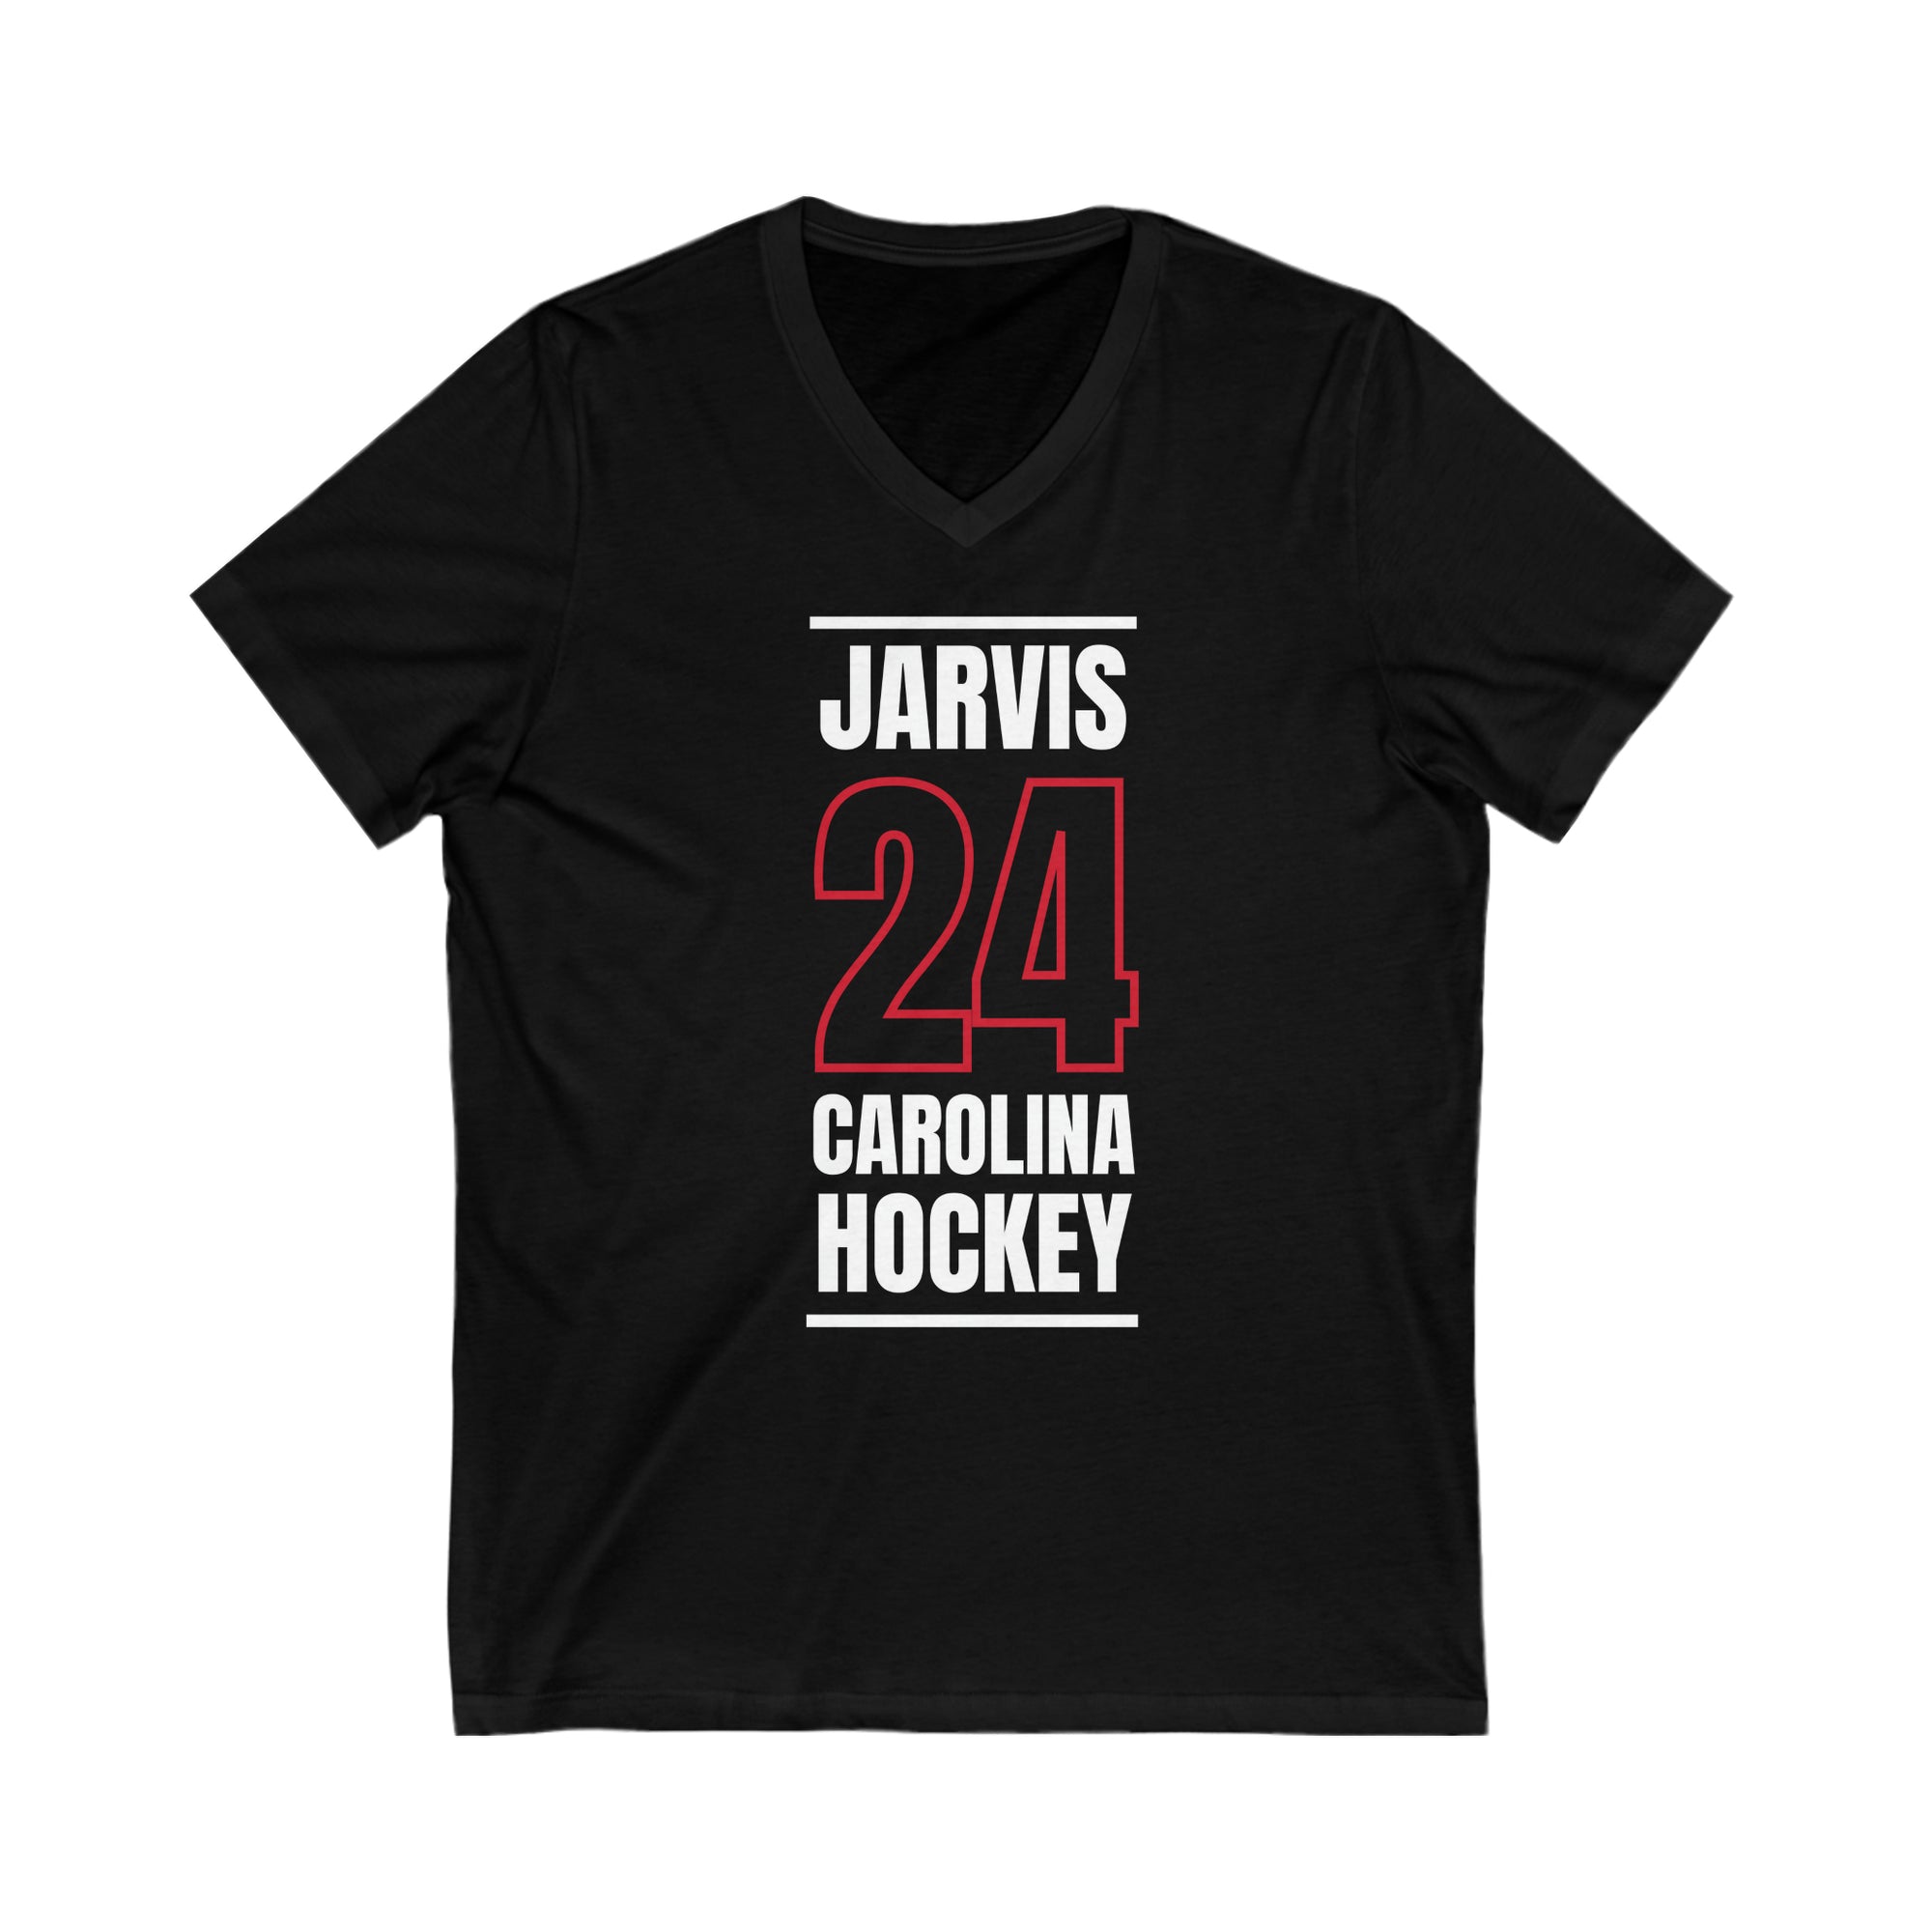 Jarvis 24 Carolina Hockey Black Vertical Design Unisex V-Neck Tee